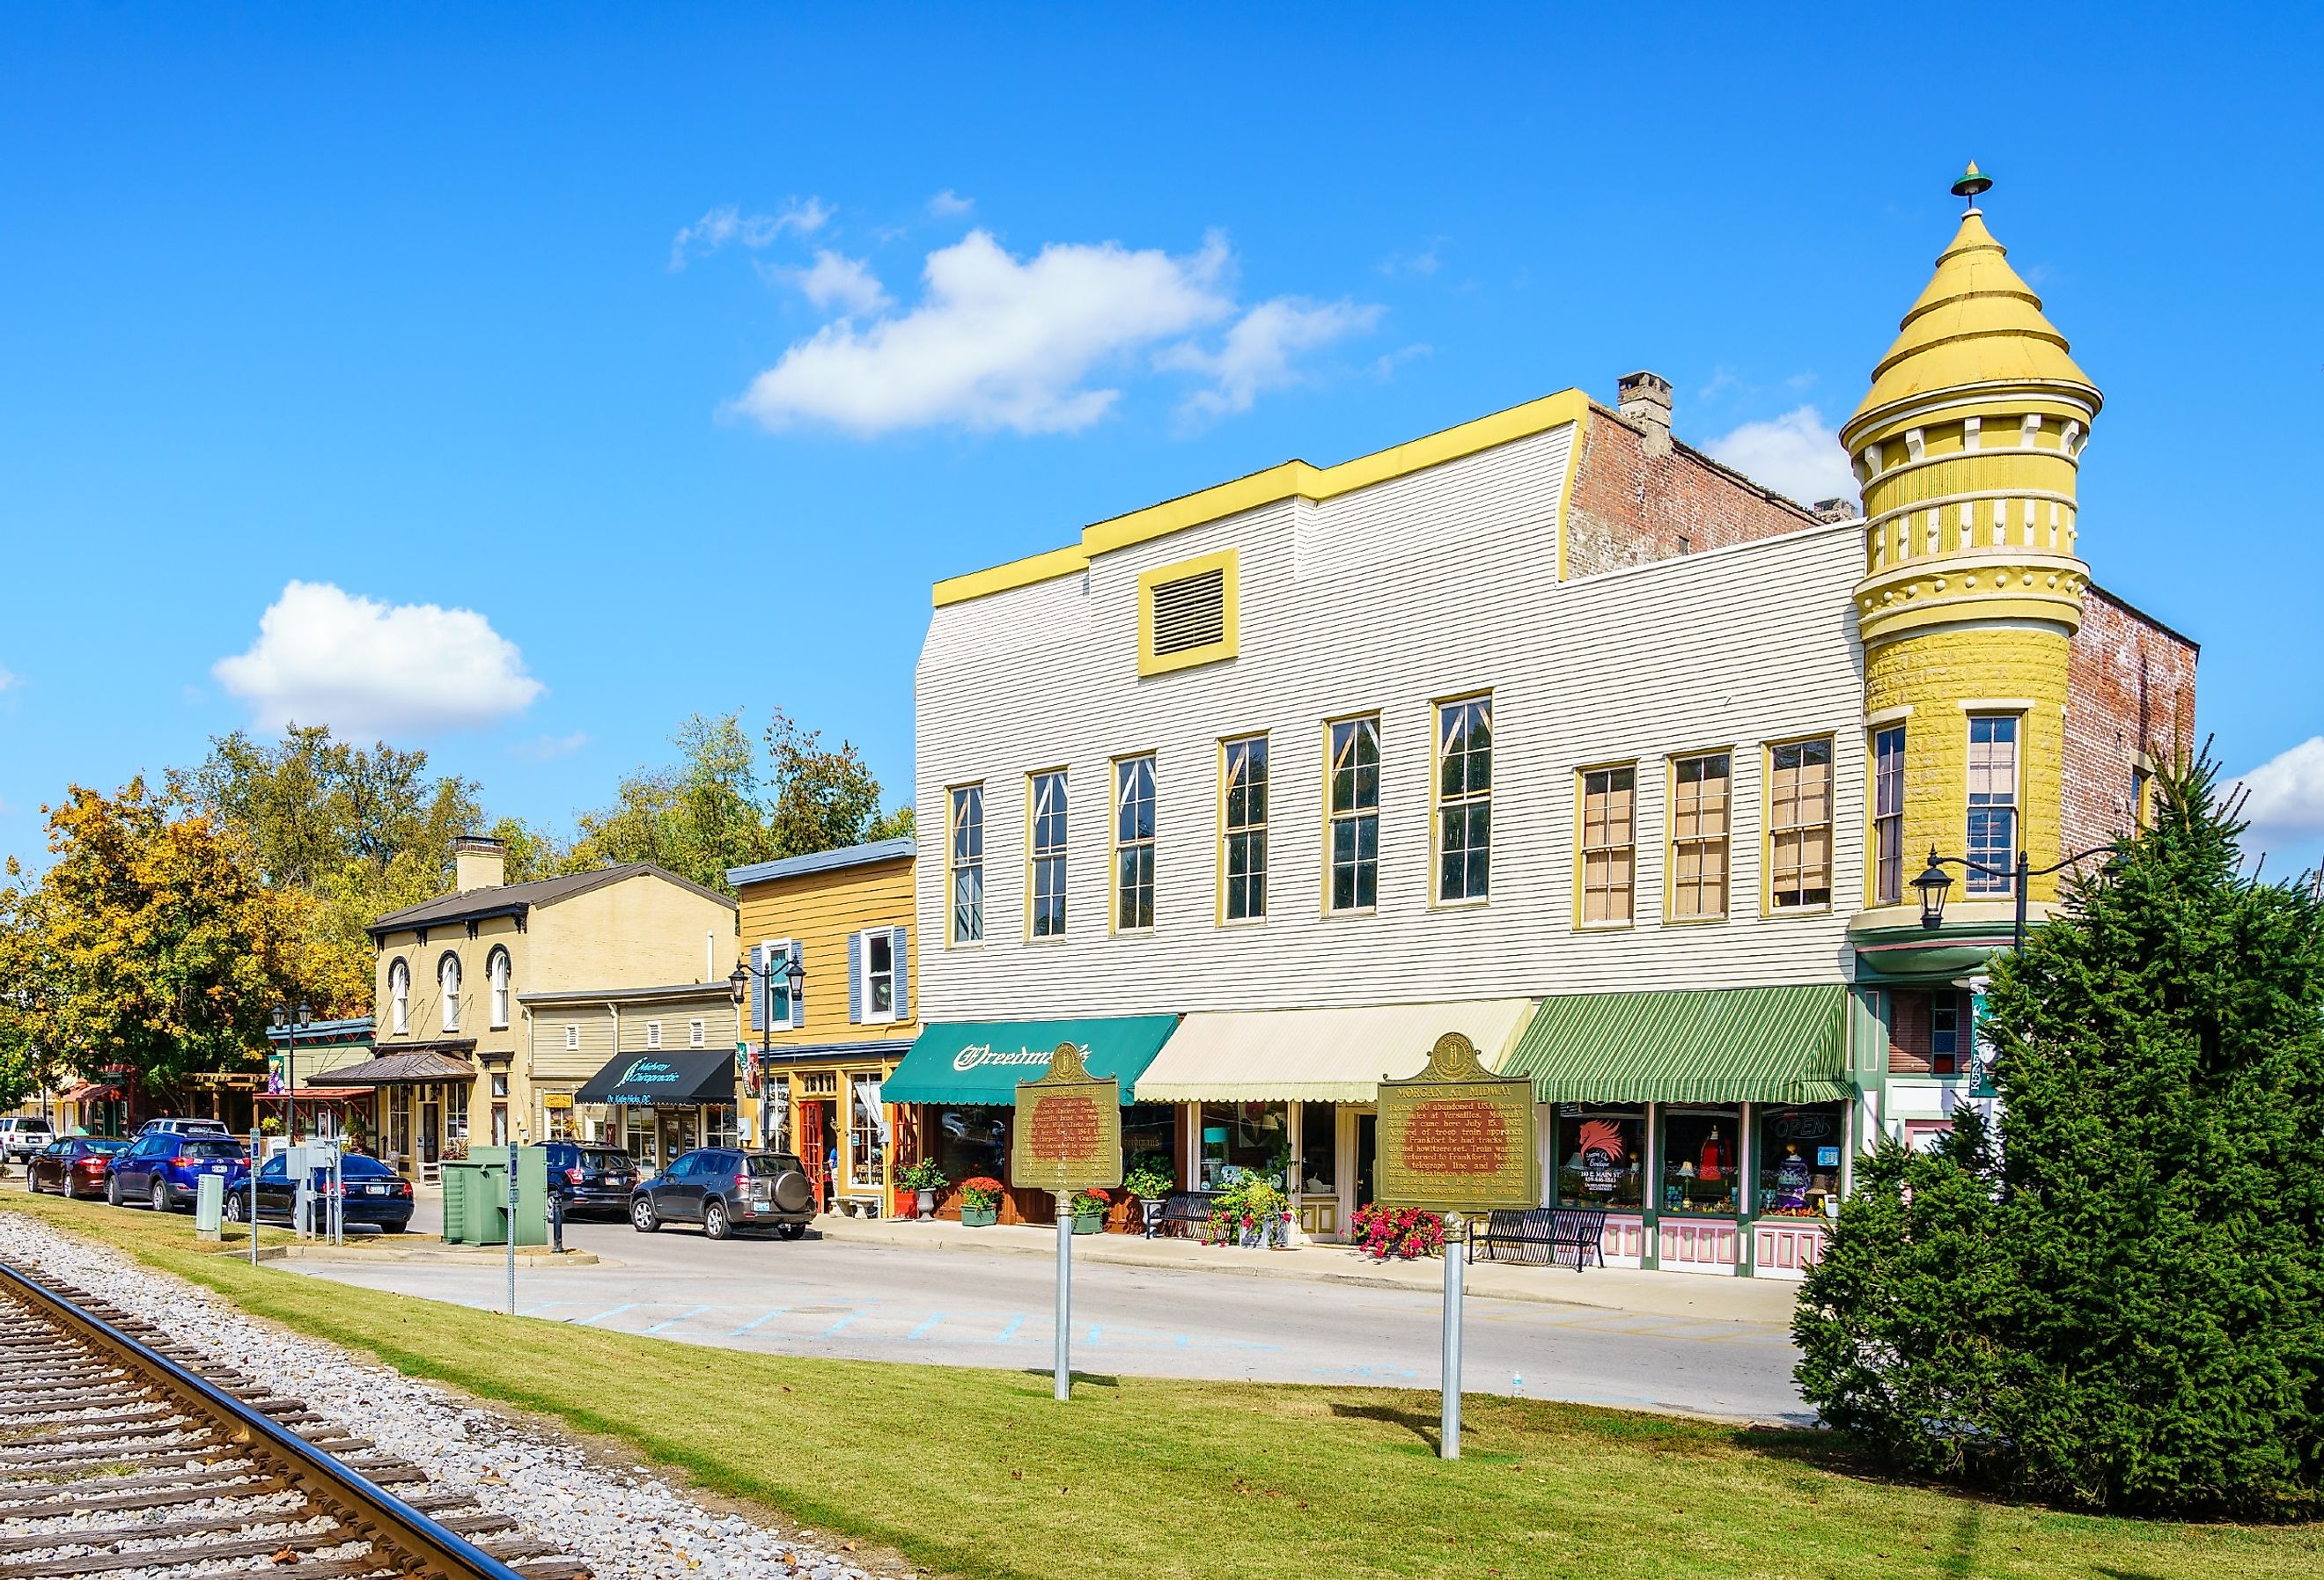 Main street of Midway, Kentucky. Image credit: Alexey Stiop via Shutterstock